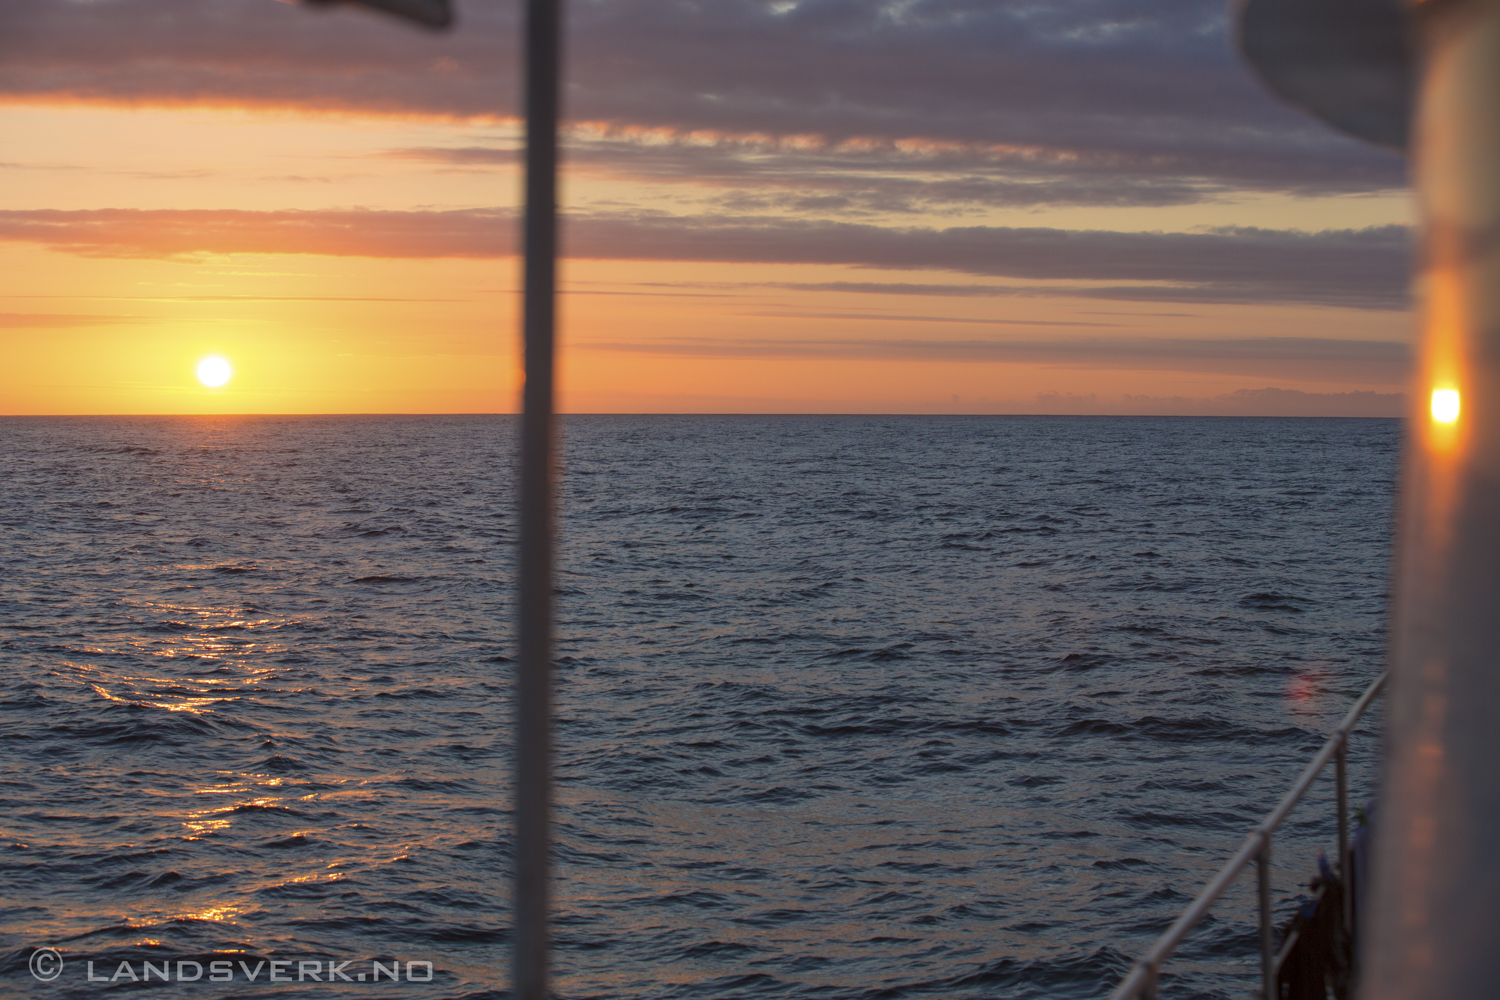 Sailing between the Galapagos Islands. 

(Canon EOS 5D Mark III / Canon EF 70-200mm f/2.8 L IS II USM)